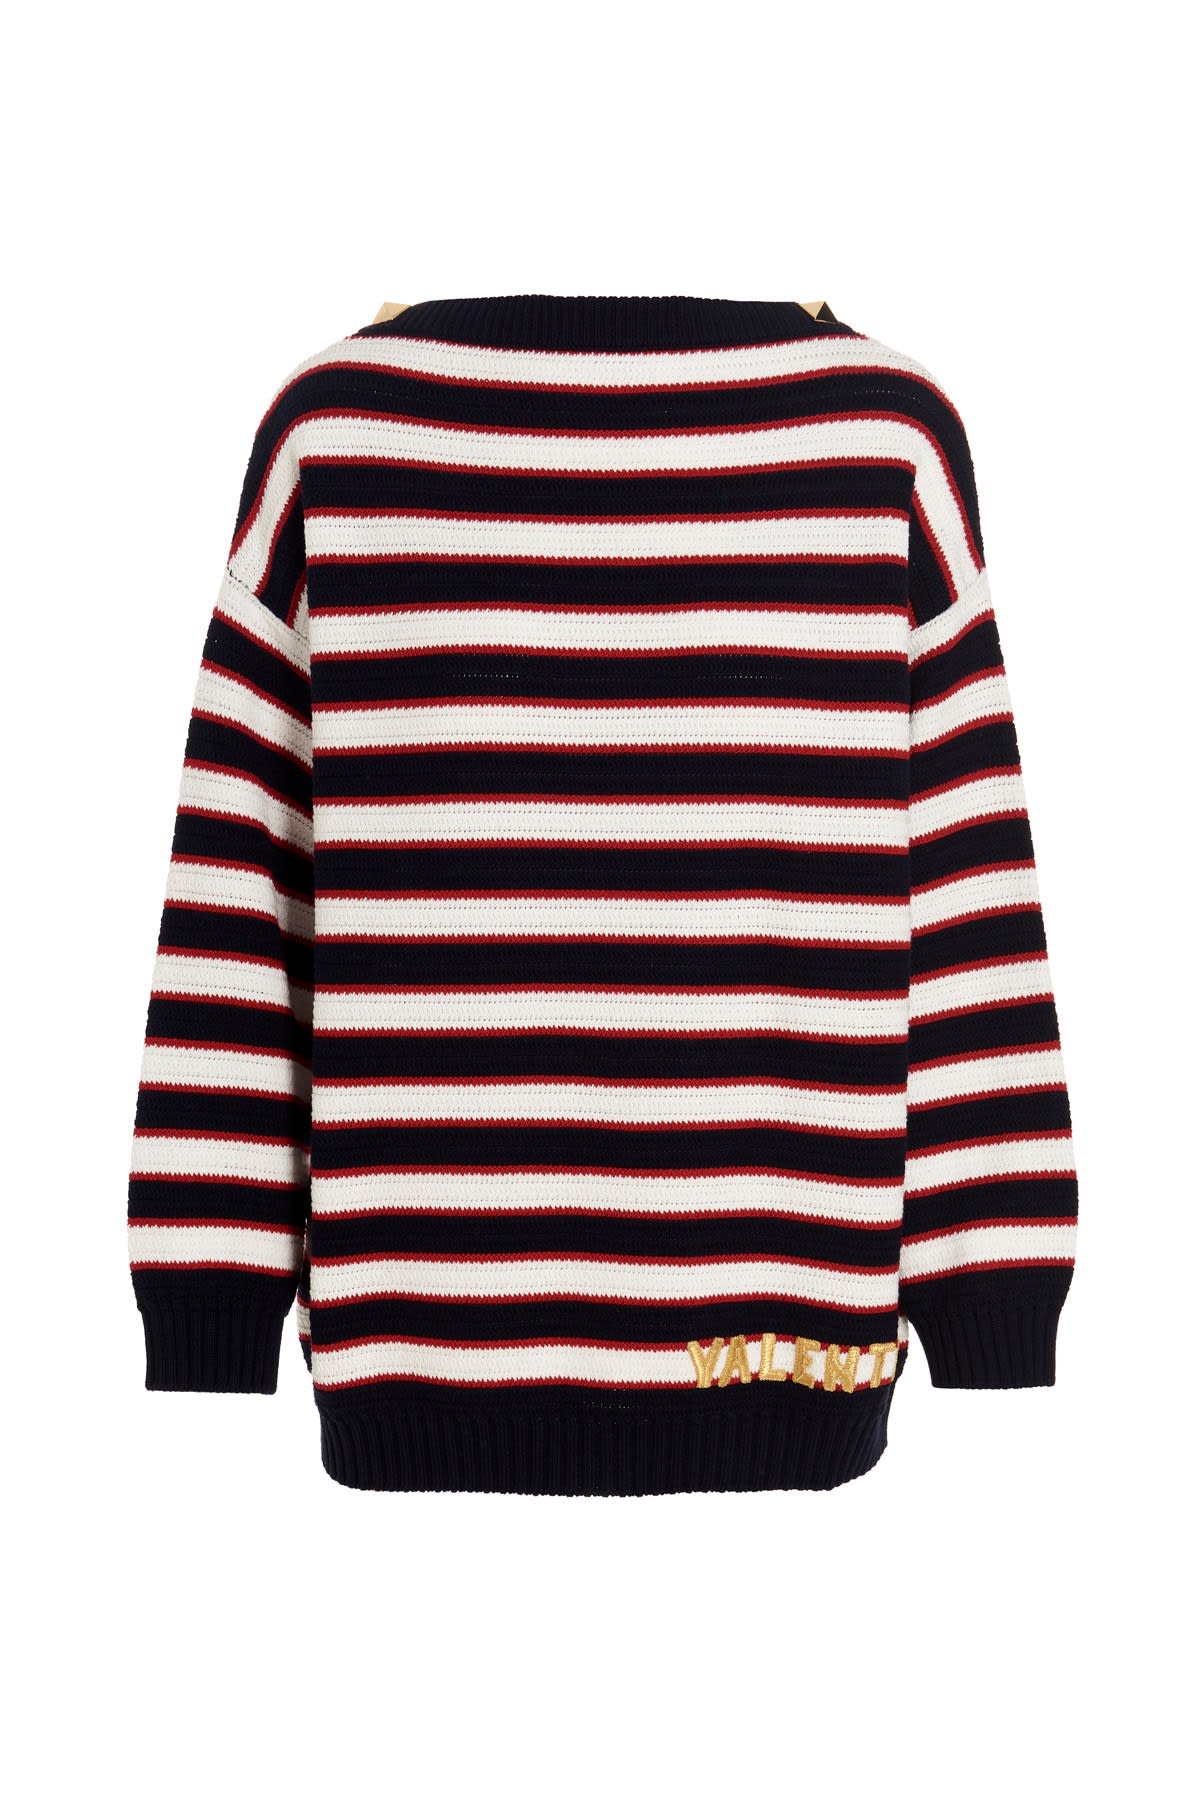 Valentino Logo Studded Striped Sweater